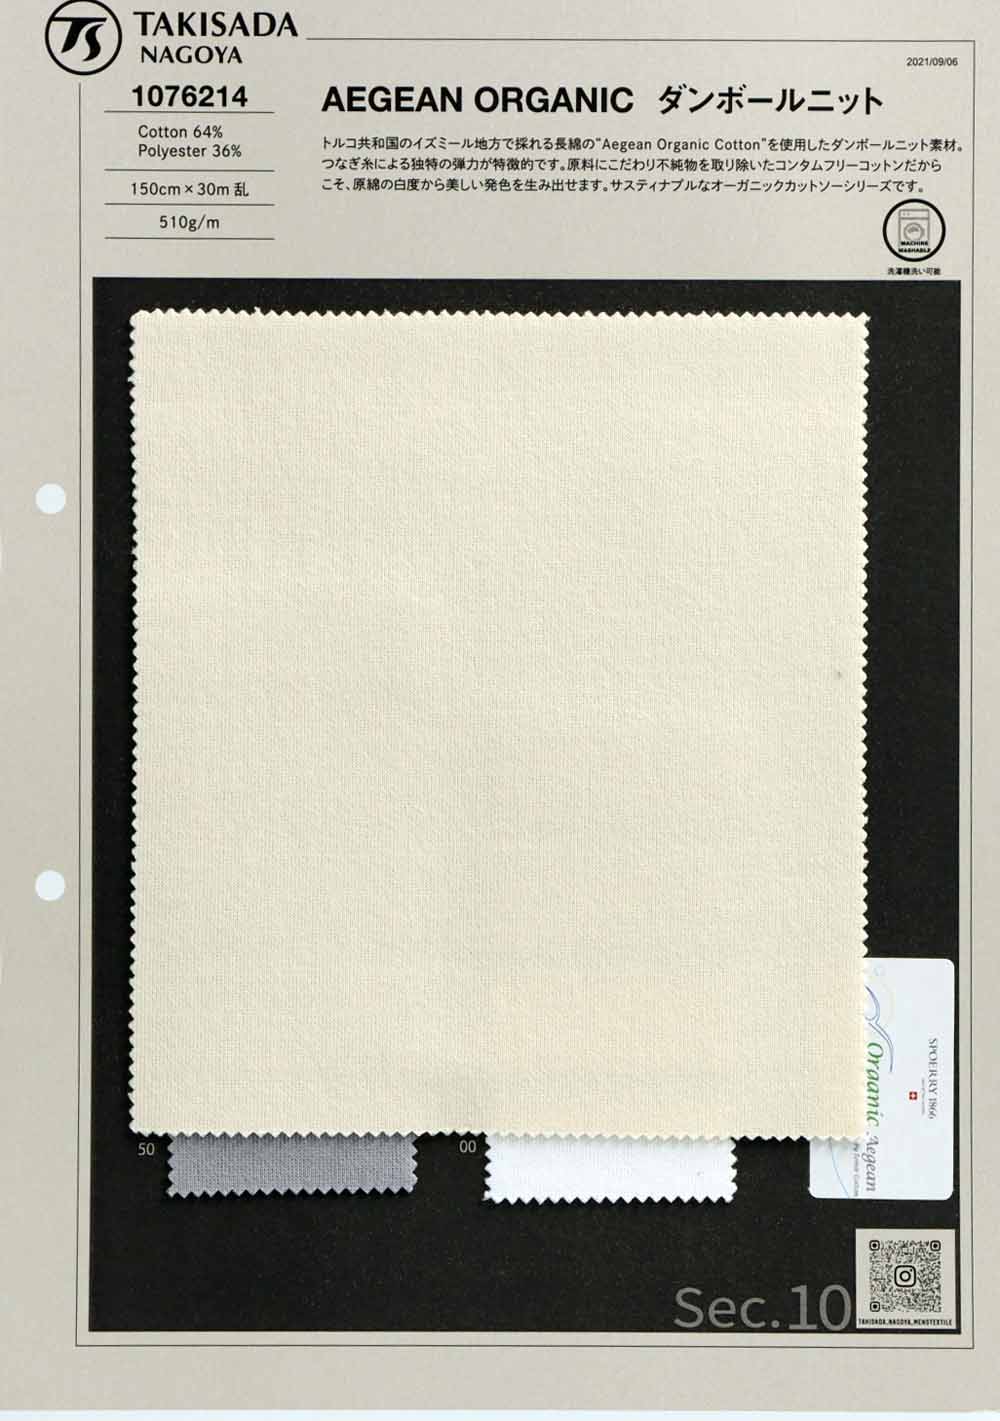 1076214 AEGEAN ORGANIC Double Knit[Textile / Fabric] Takisada Nagoya